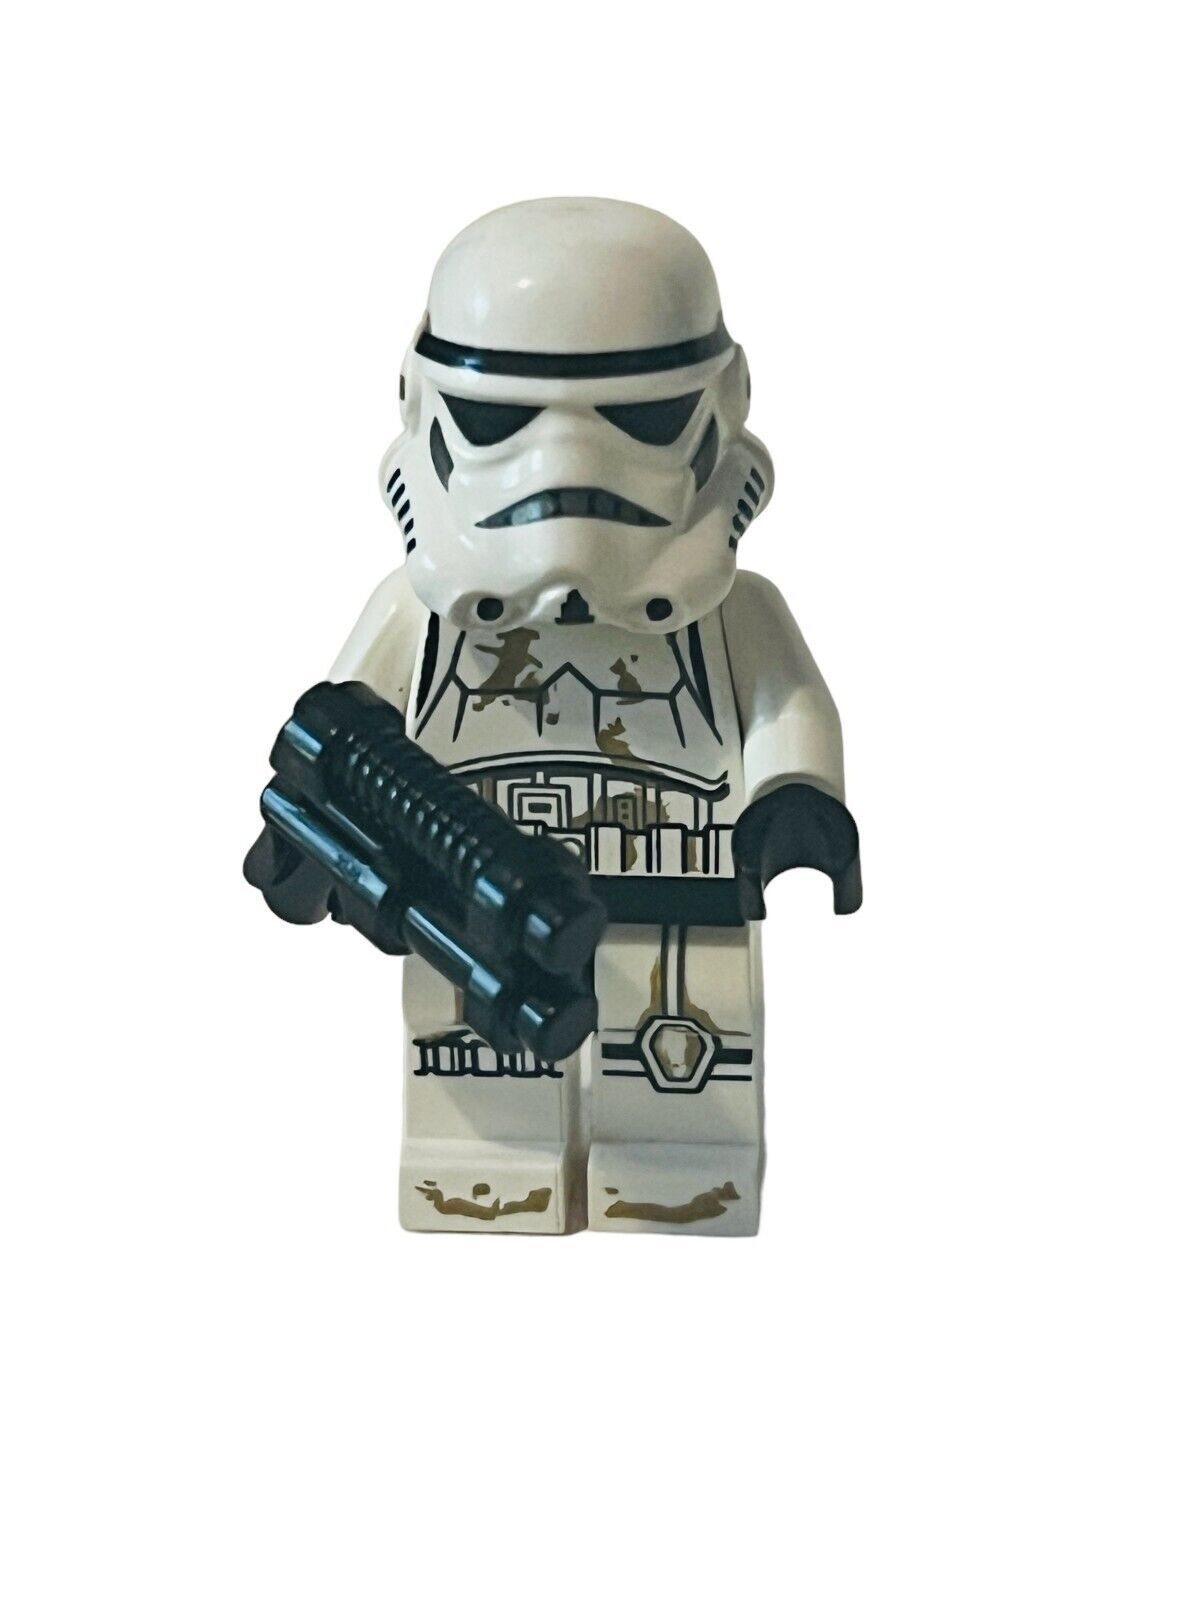 Primary image for Lego Mini Figure vtg minifigure toy building block Star Wars Stormtrooper Empire